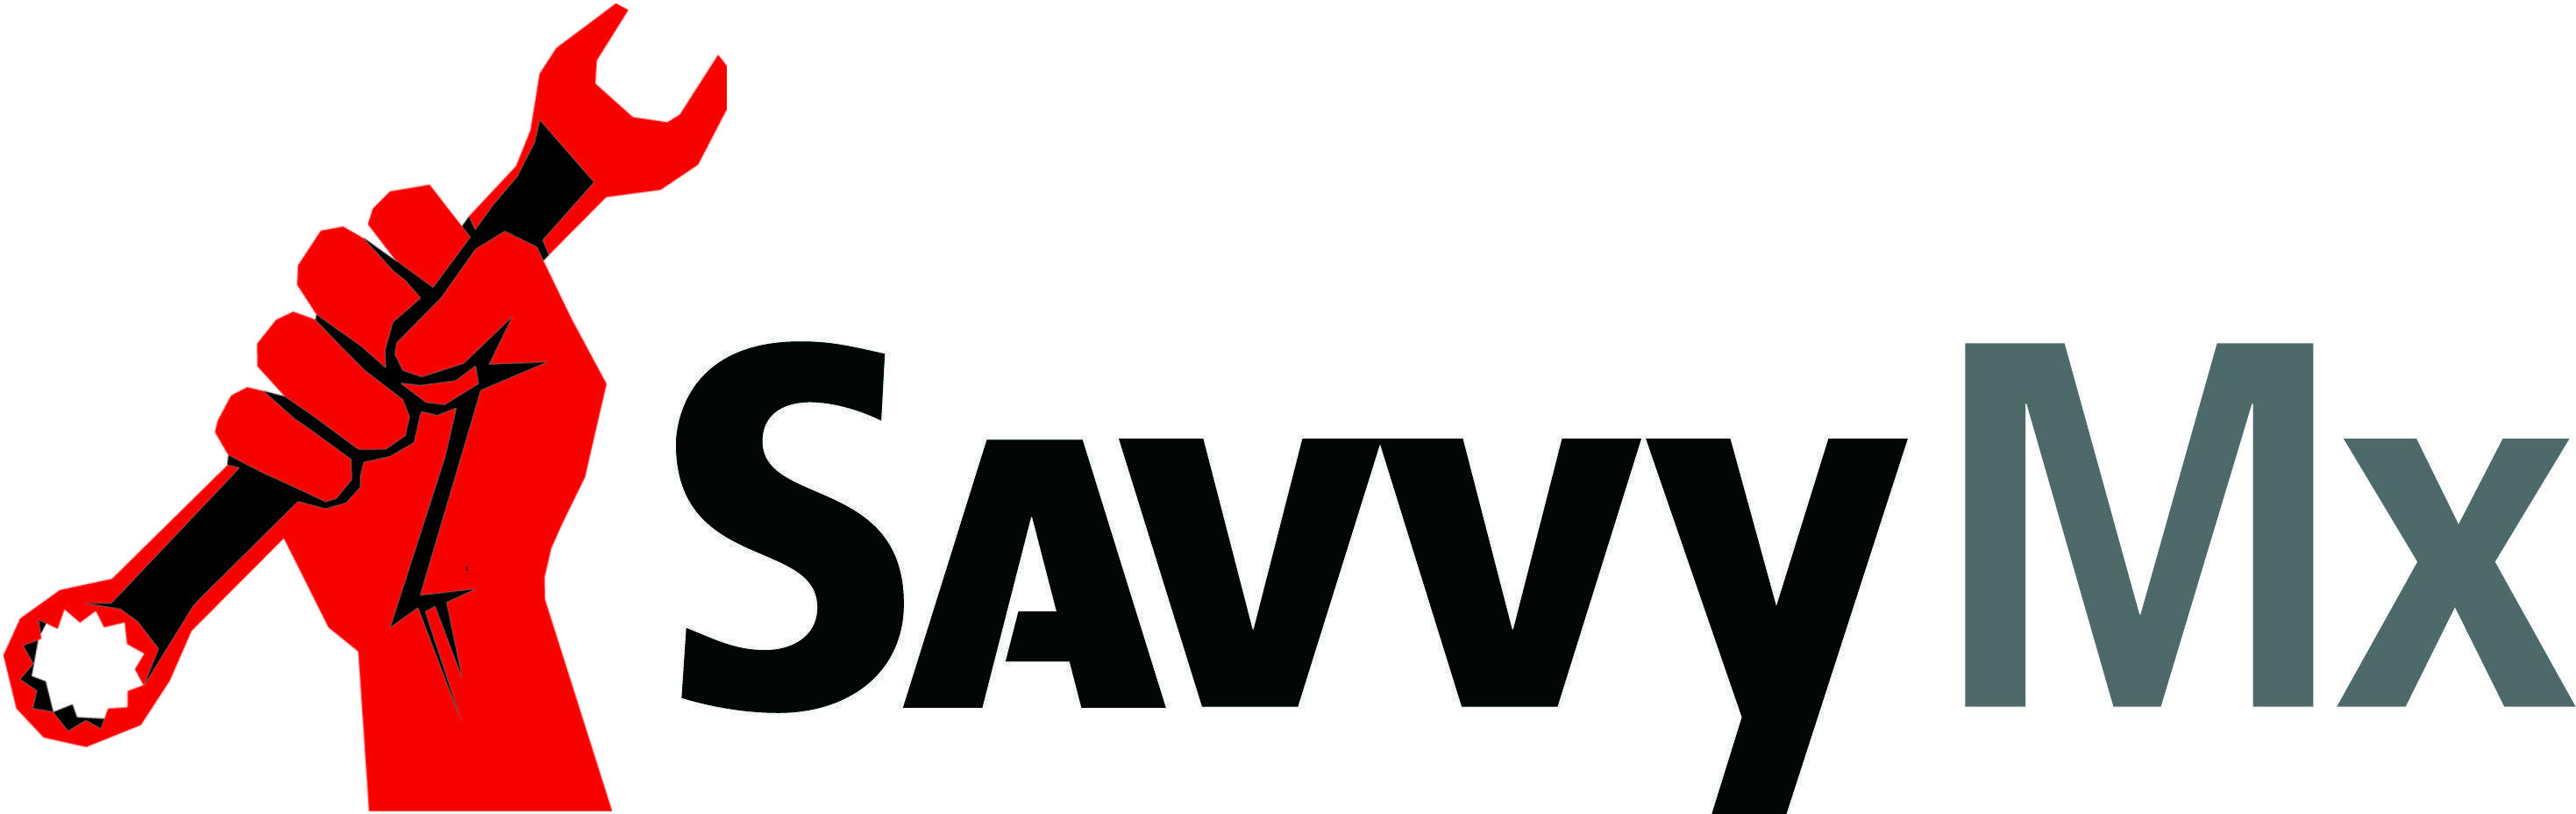 Savvy Logo - savvymx-logo-hi-res – Savvy Aviation, Inc.